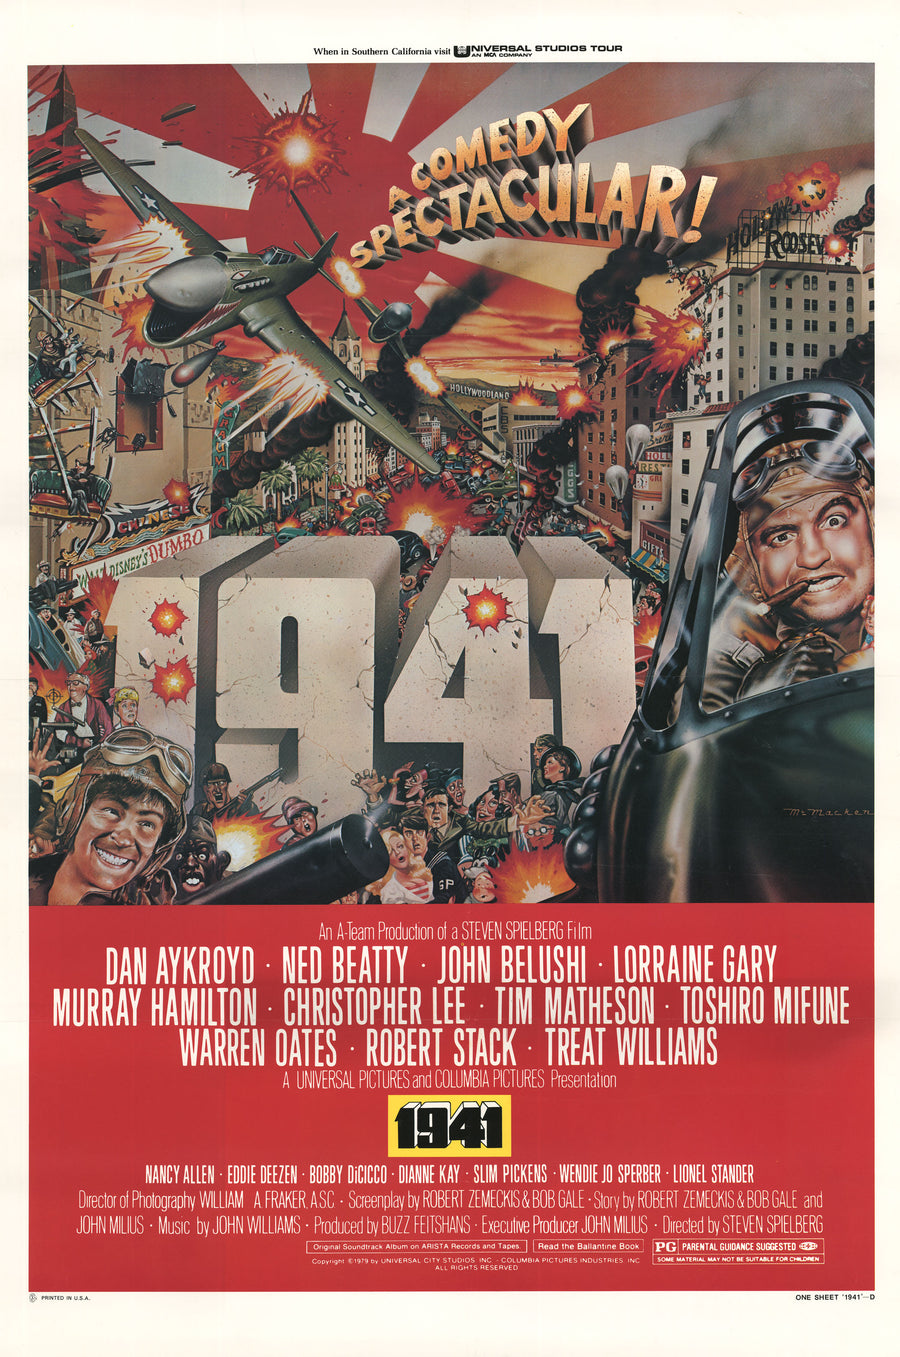 Original Vintage 1941 Movie Poster by David McMacken, 1979